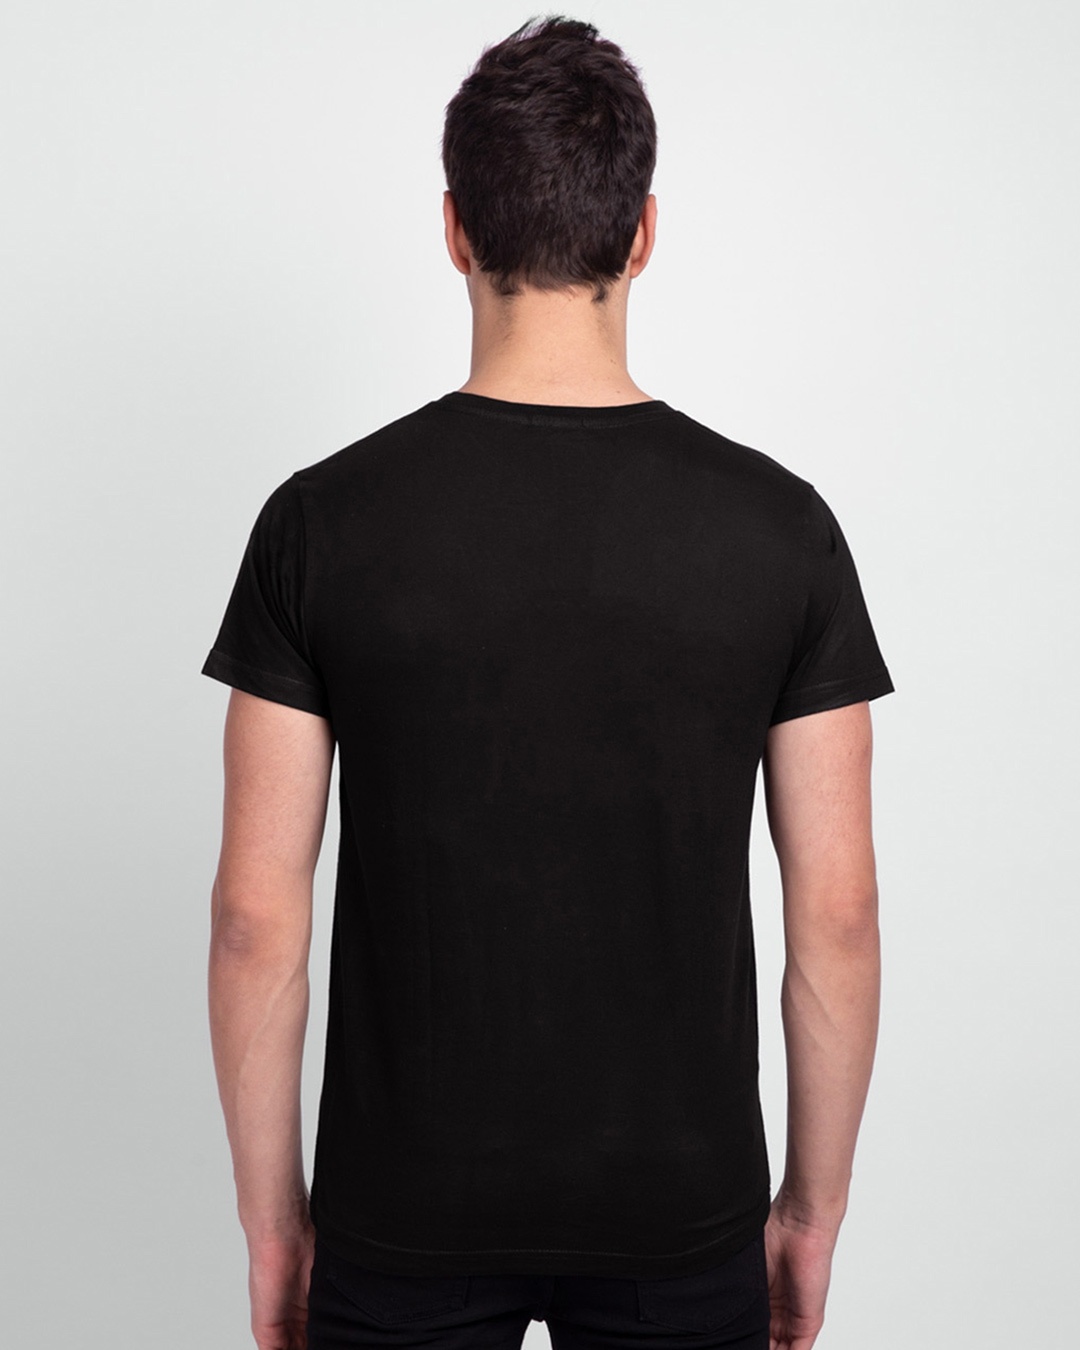 Shop Men's Plain Half Sleeve T-Shirt Pack of 3(Black, White & Pineapple Yellow)